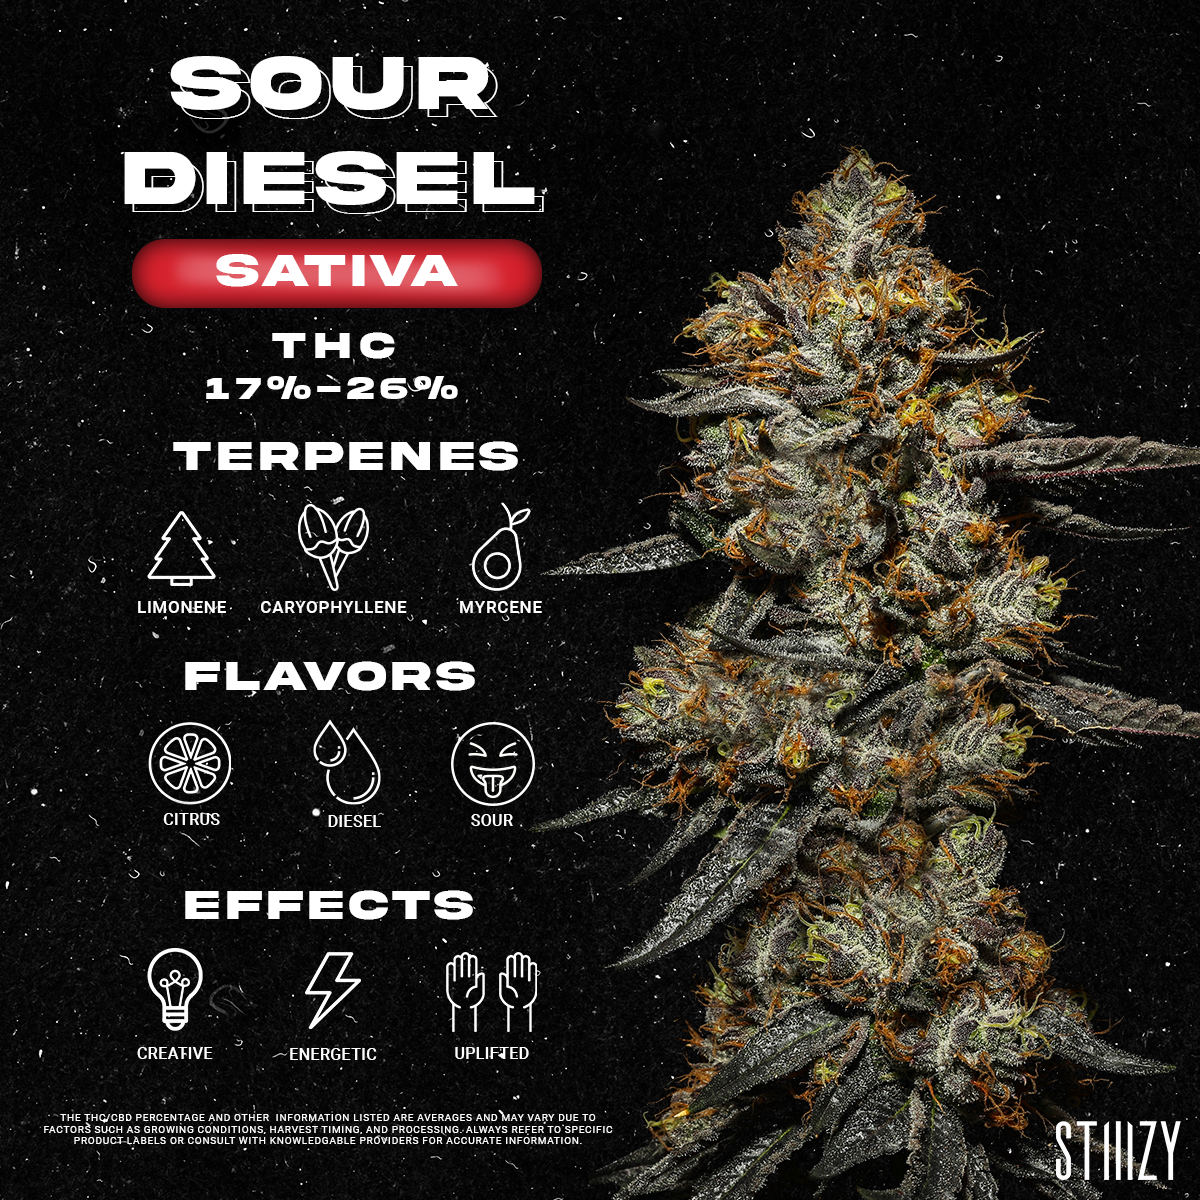 Sour Diesel Strain - Infographic